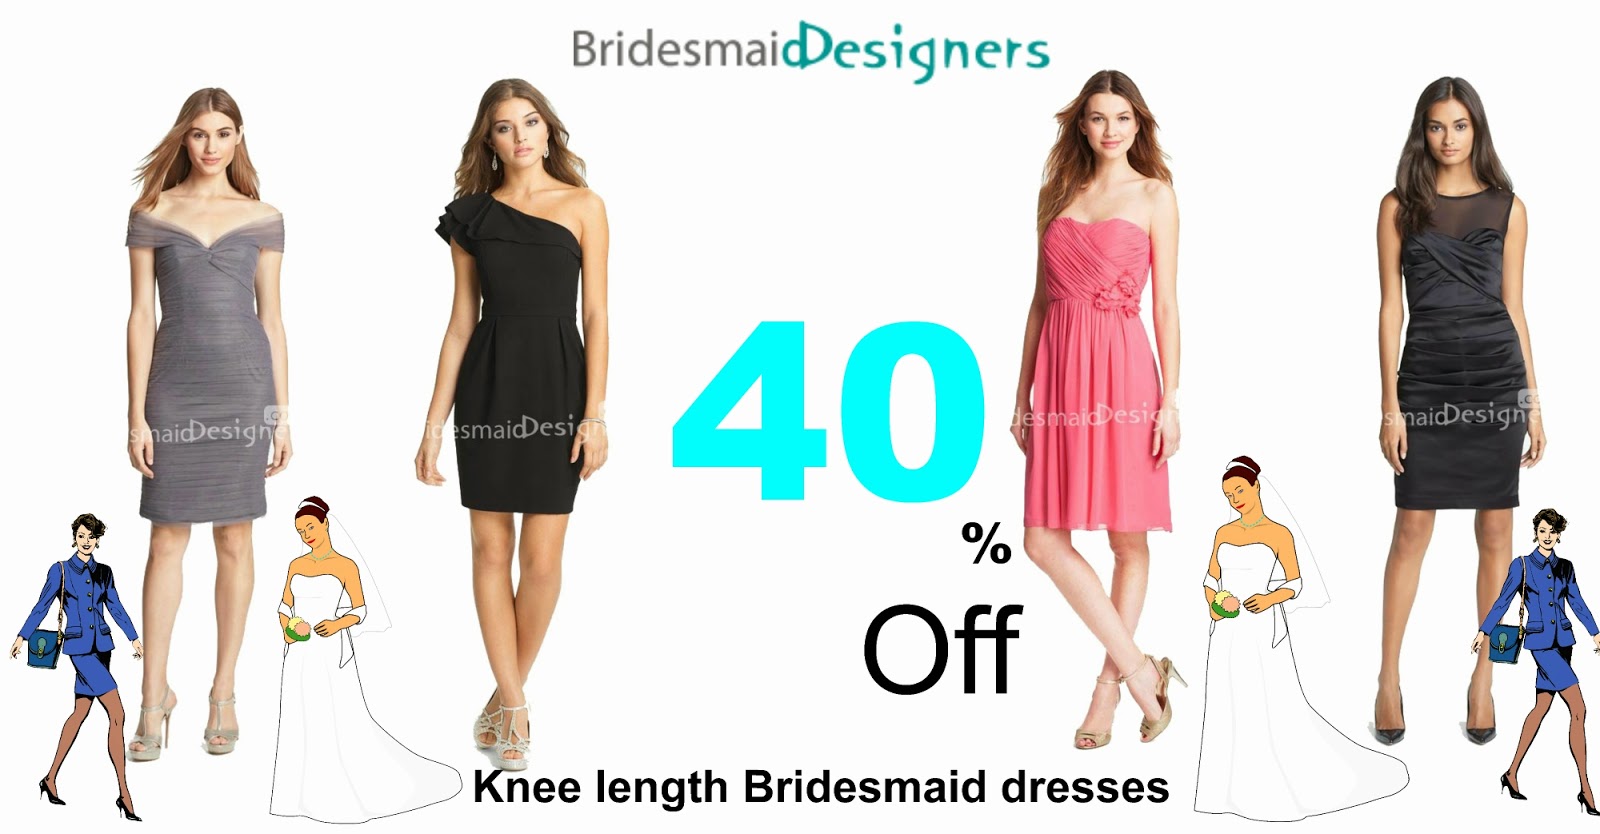 http://www.bridesmaiddesigners.com/Knee-Length-bridesmaid-dresses